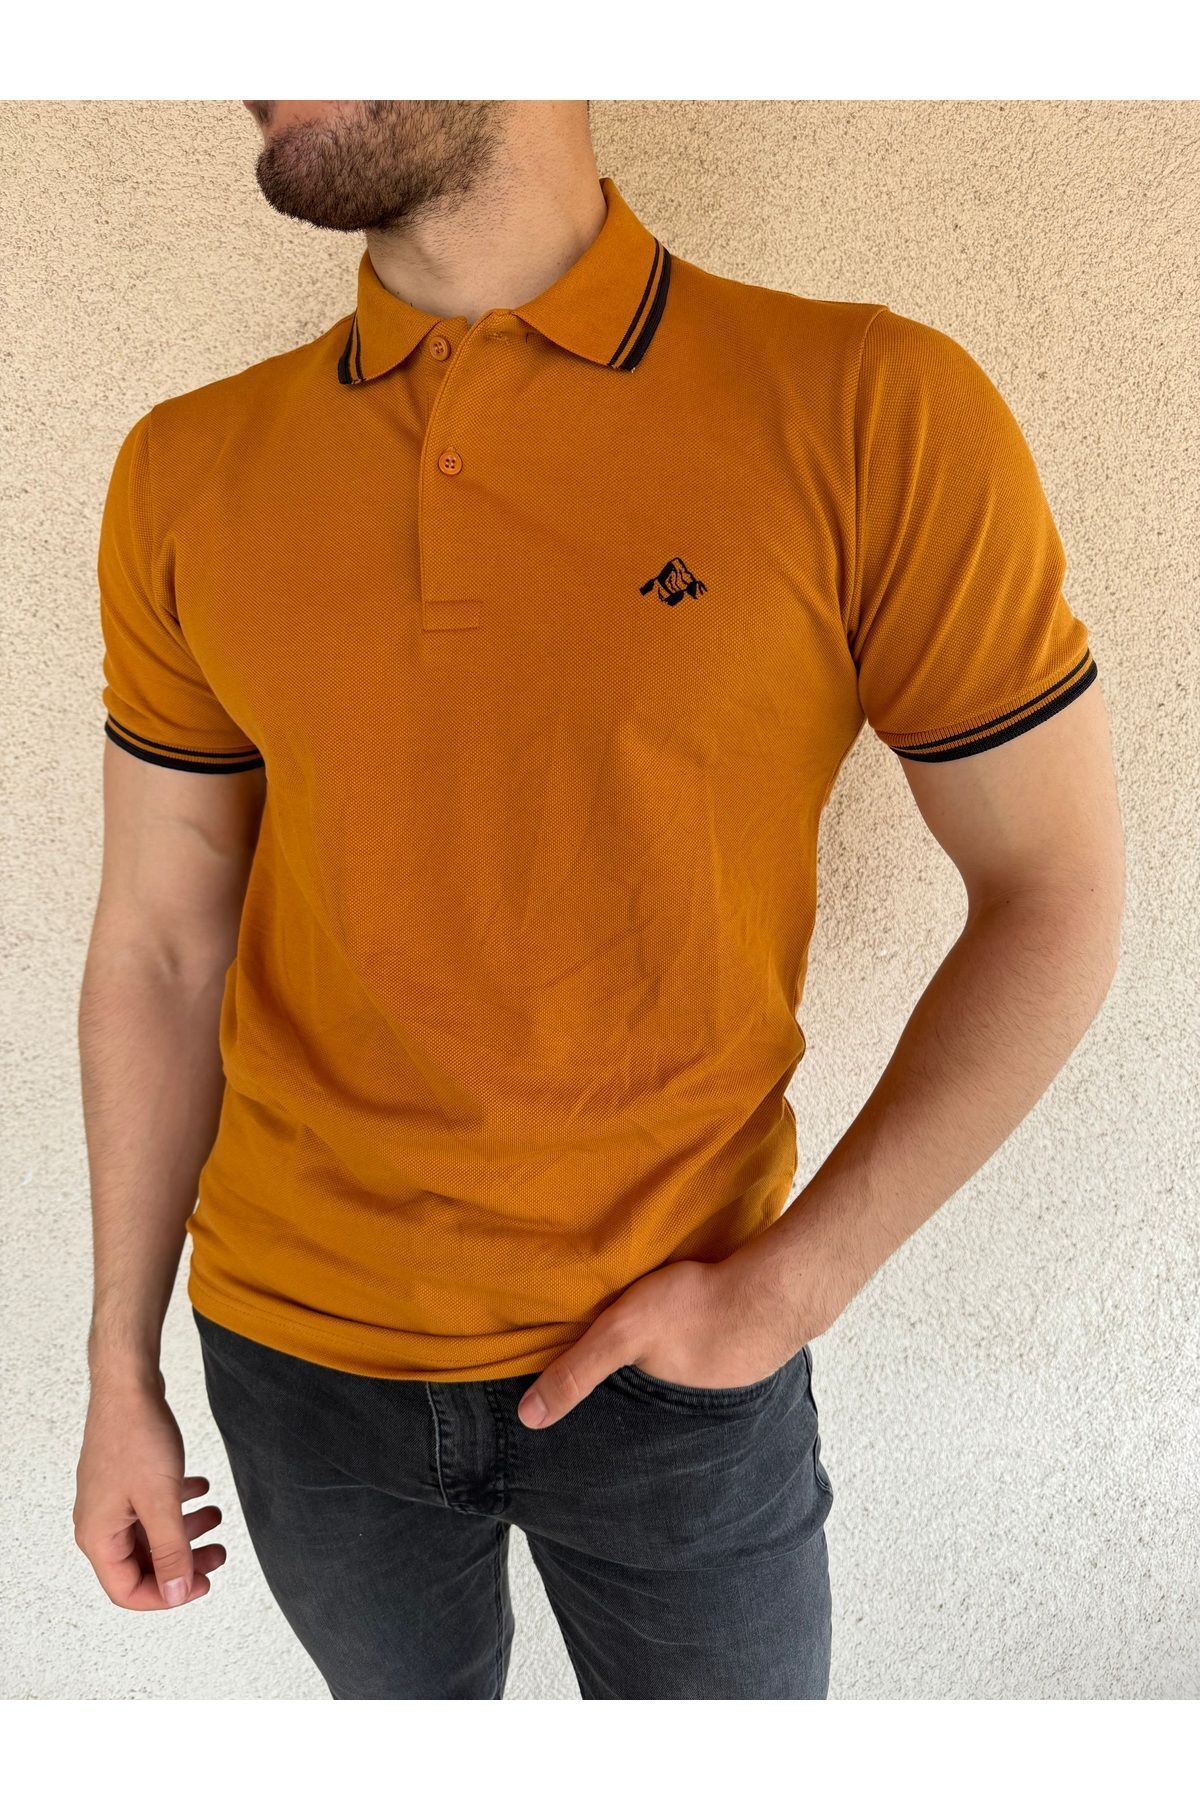 Mesh Erkek Polo Yaka T-shirt Hardal Renk, %100 Pamuk Lacivert Çizgili Kısa Kollu Parçalı Model